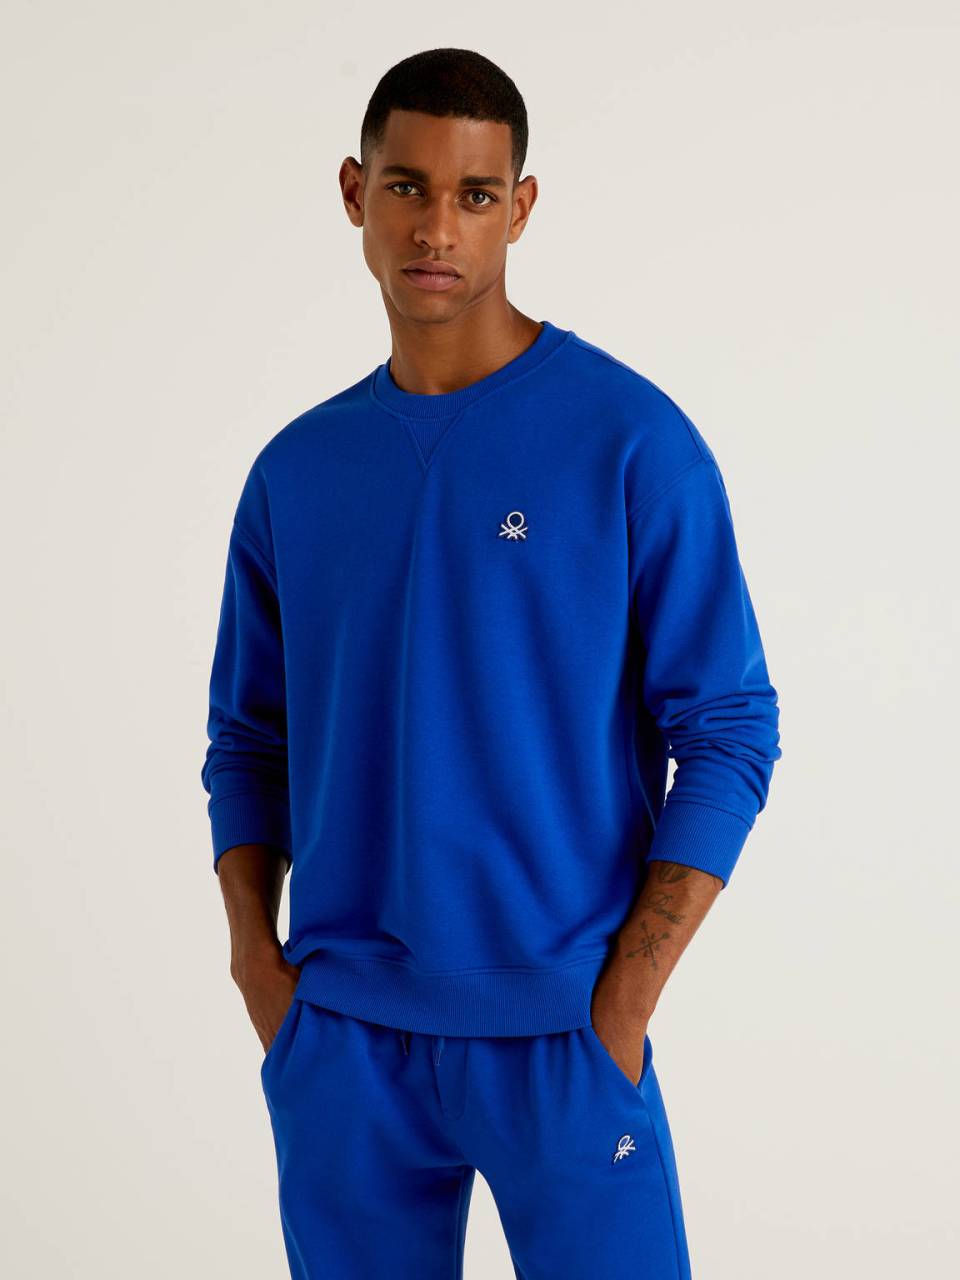 Benetton 100% cotton sweatshirt with applied logo. 1